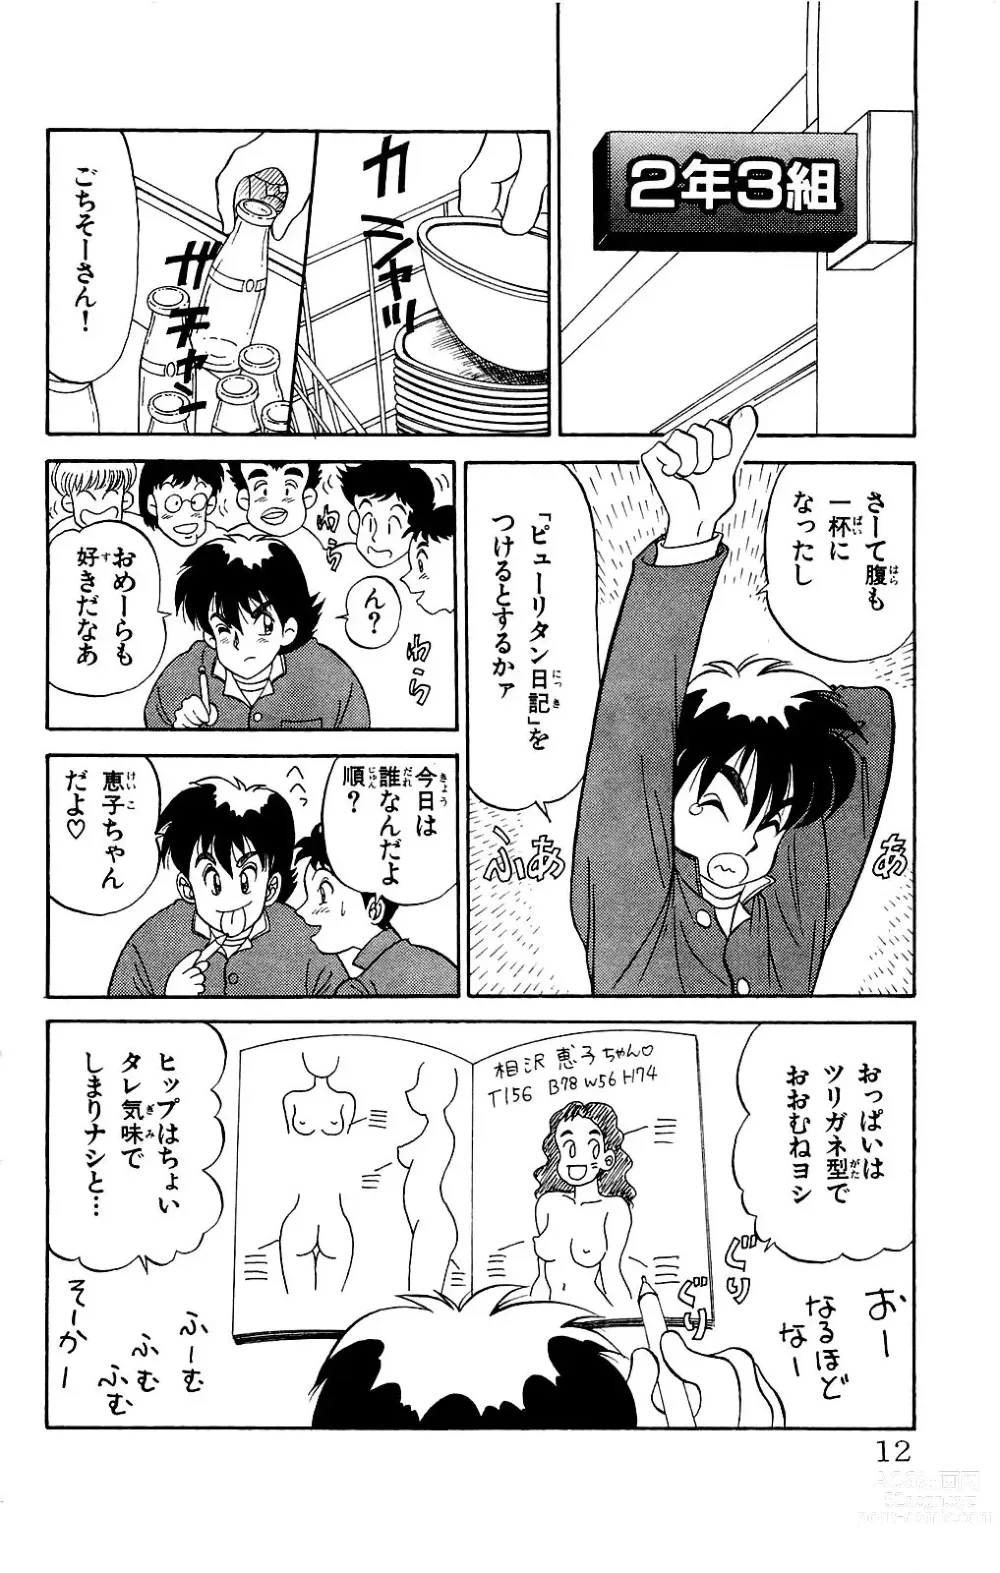 Page 10 of manga Orette Piyoritan Vol. 1